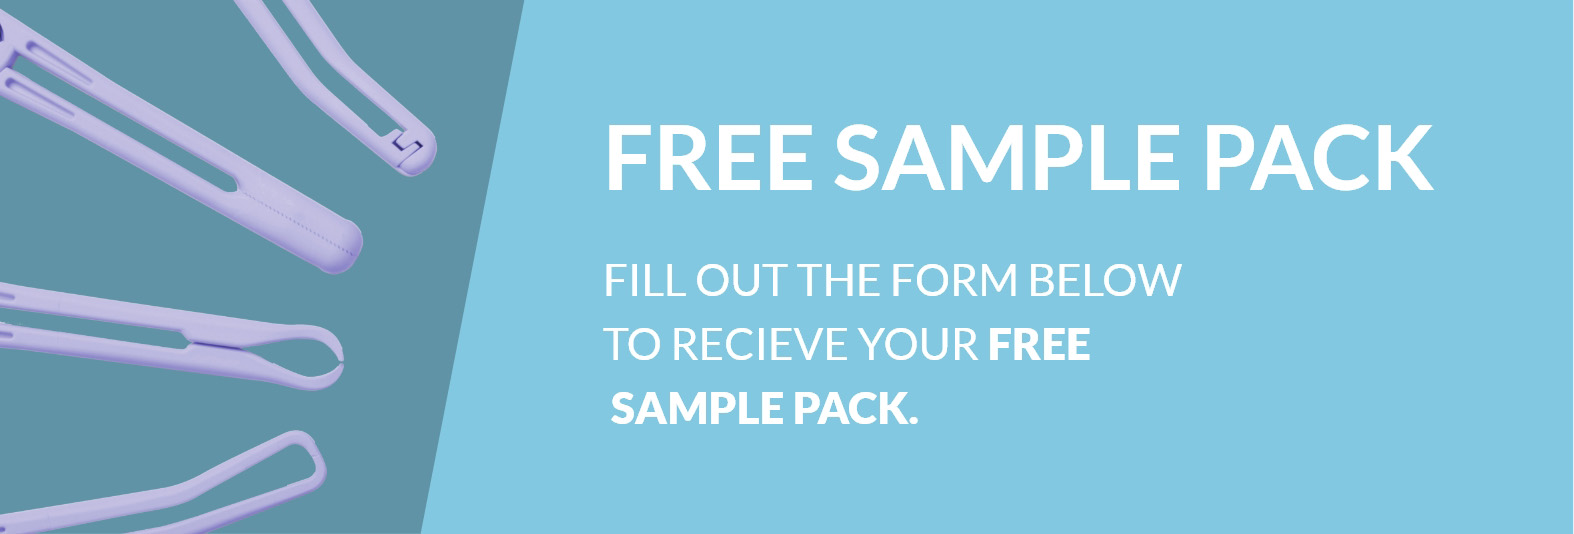 free sample@2x.jpg